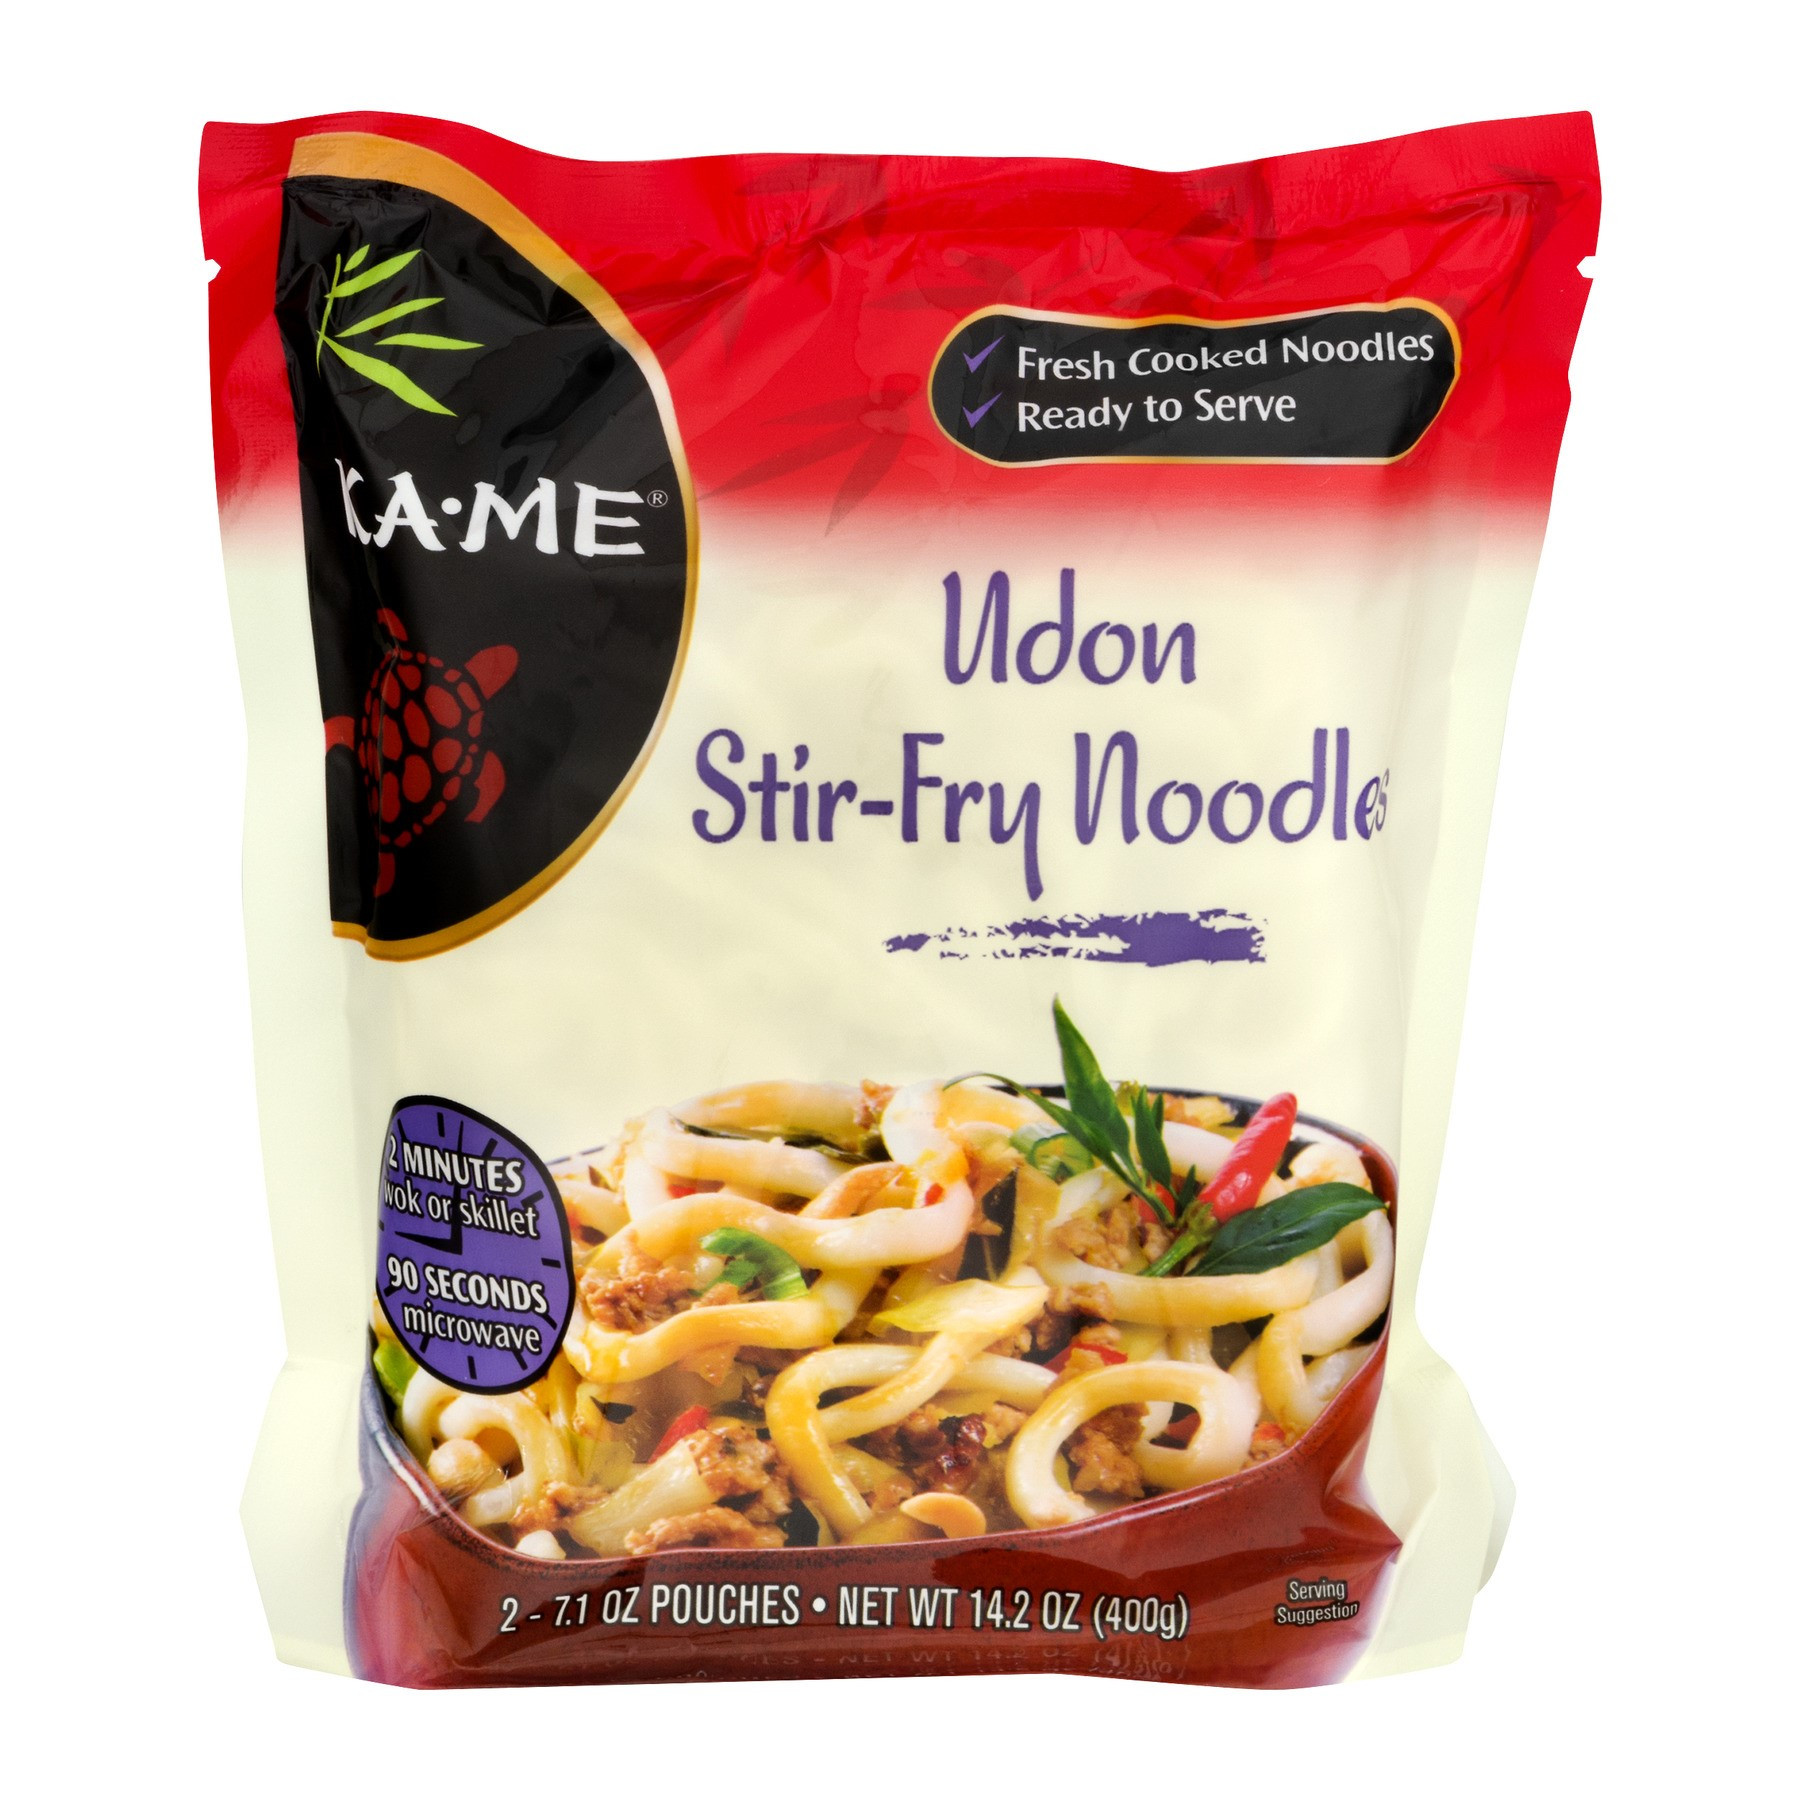 Udon Noodles Walmart
 KA ME Udon Stir Fry Noodles 14 2 oz Walmart